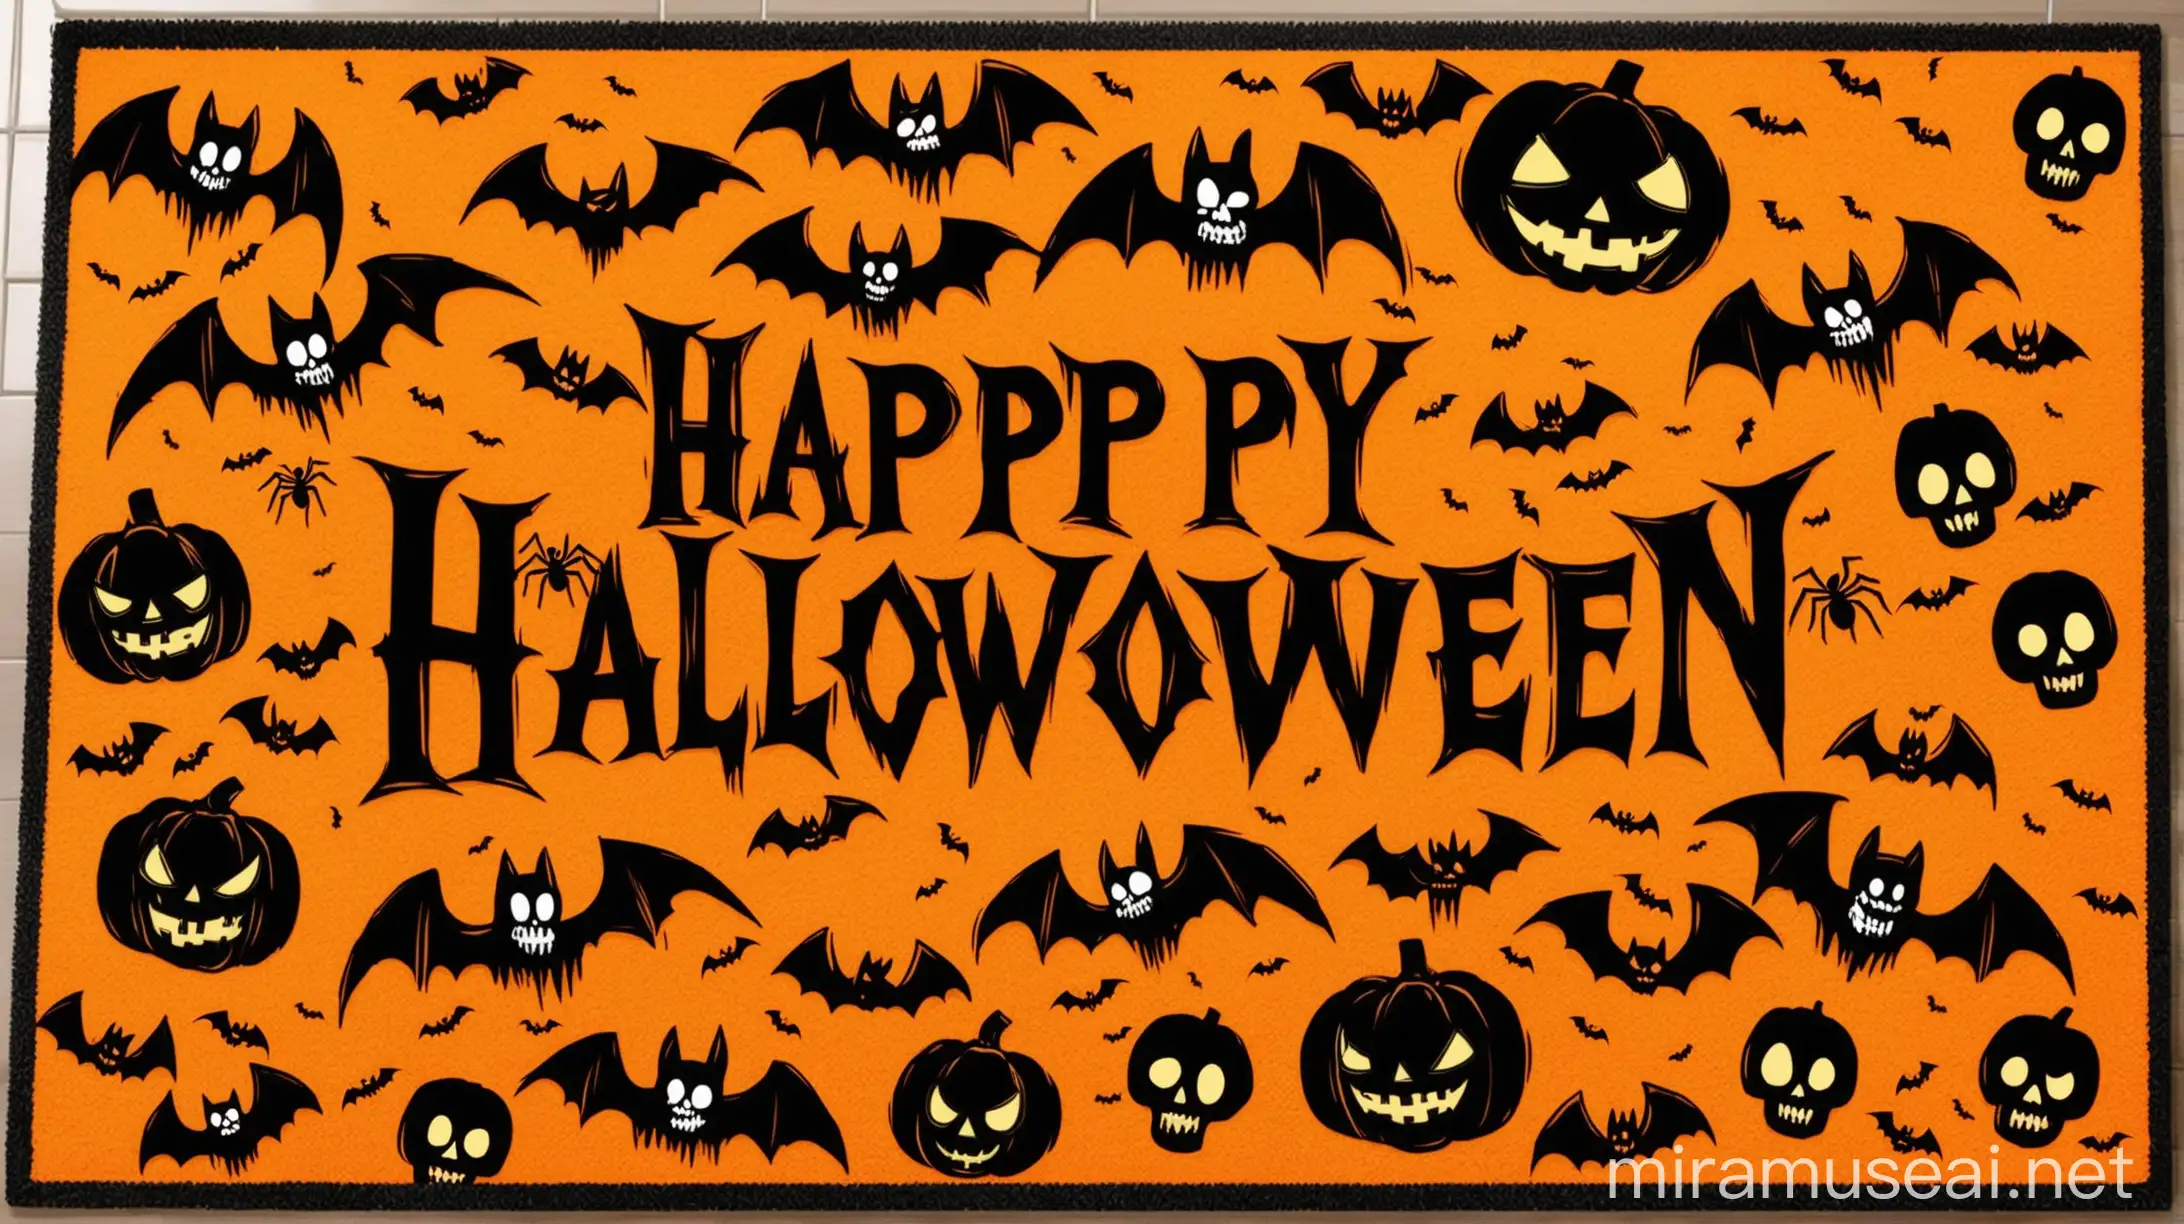 Spooky Halloween Pumpkin Display with Skulls Bats and Ghosts on English Doormat